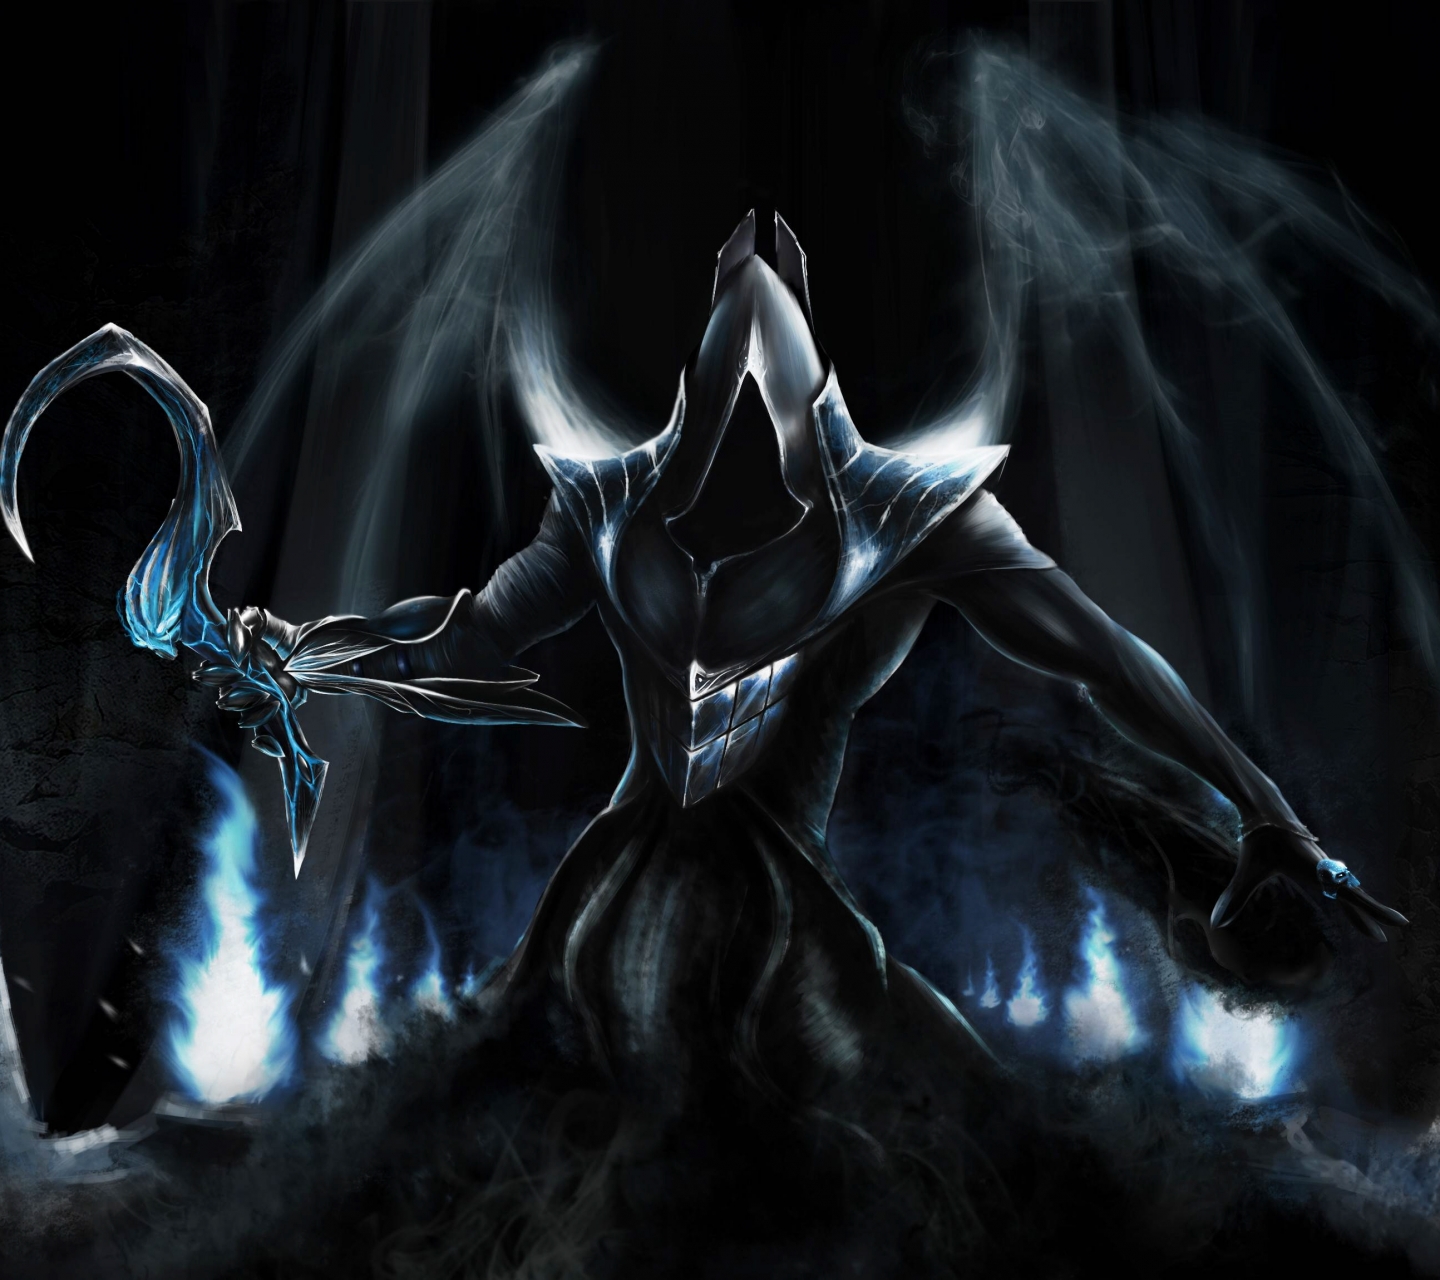 Baixe gratuitamente a imagem Diablo, Videogame, Maltael (Diablo Iii), Diablo Iii: Reaper Of Souls na área de trabalho do seu PC